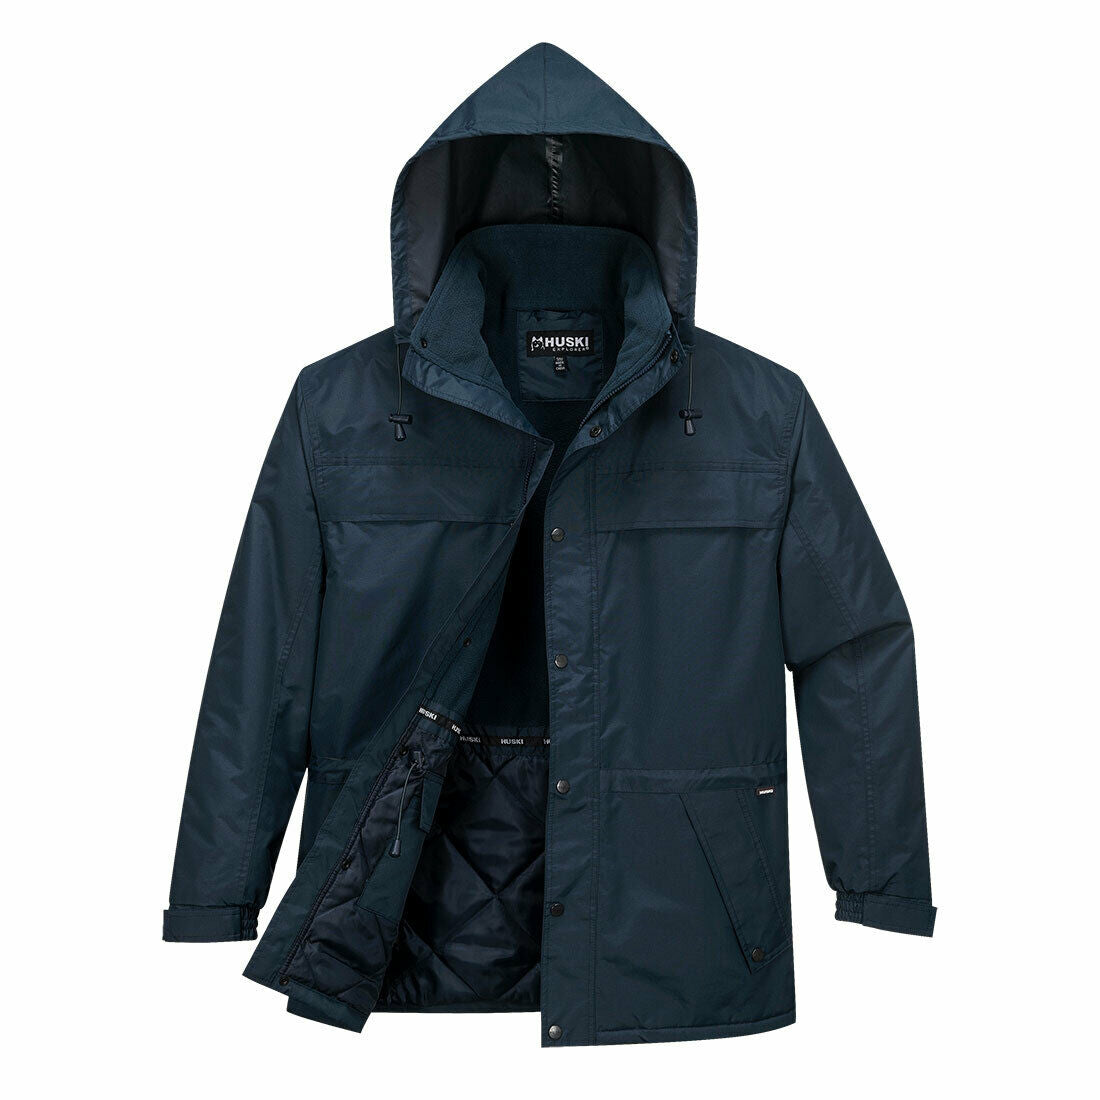 Portwest Mens Huski Everest Polar Fleece Jacket Lightweight Waterproof K4039-Collins Clothing Co